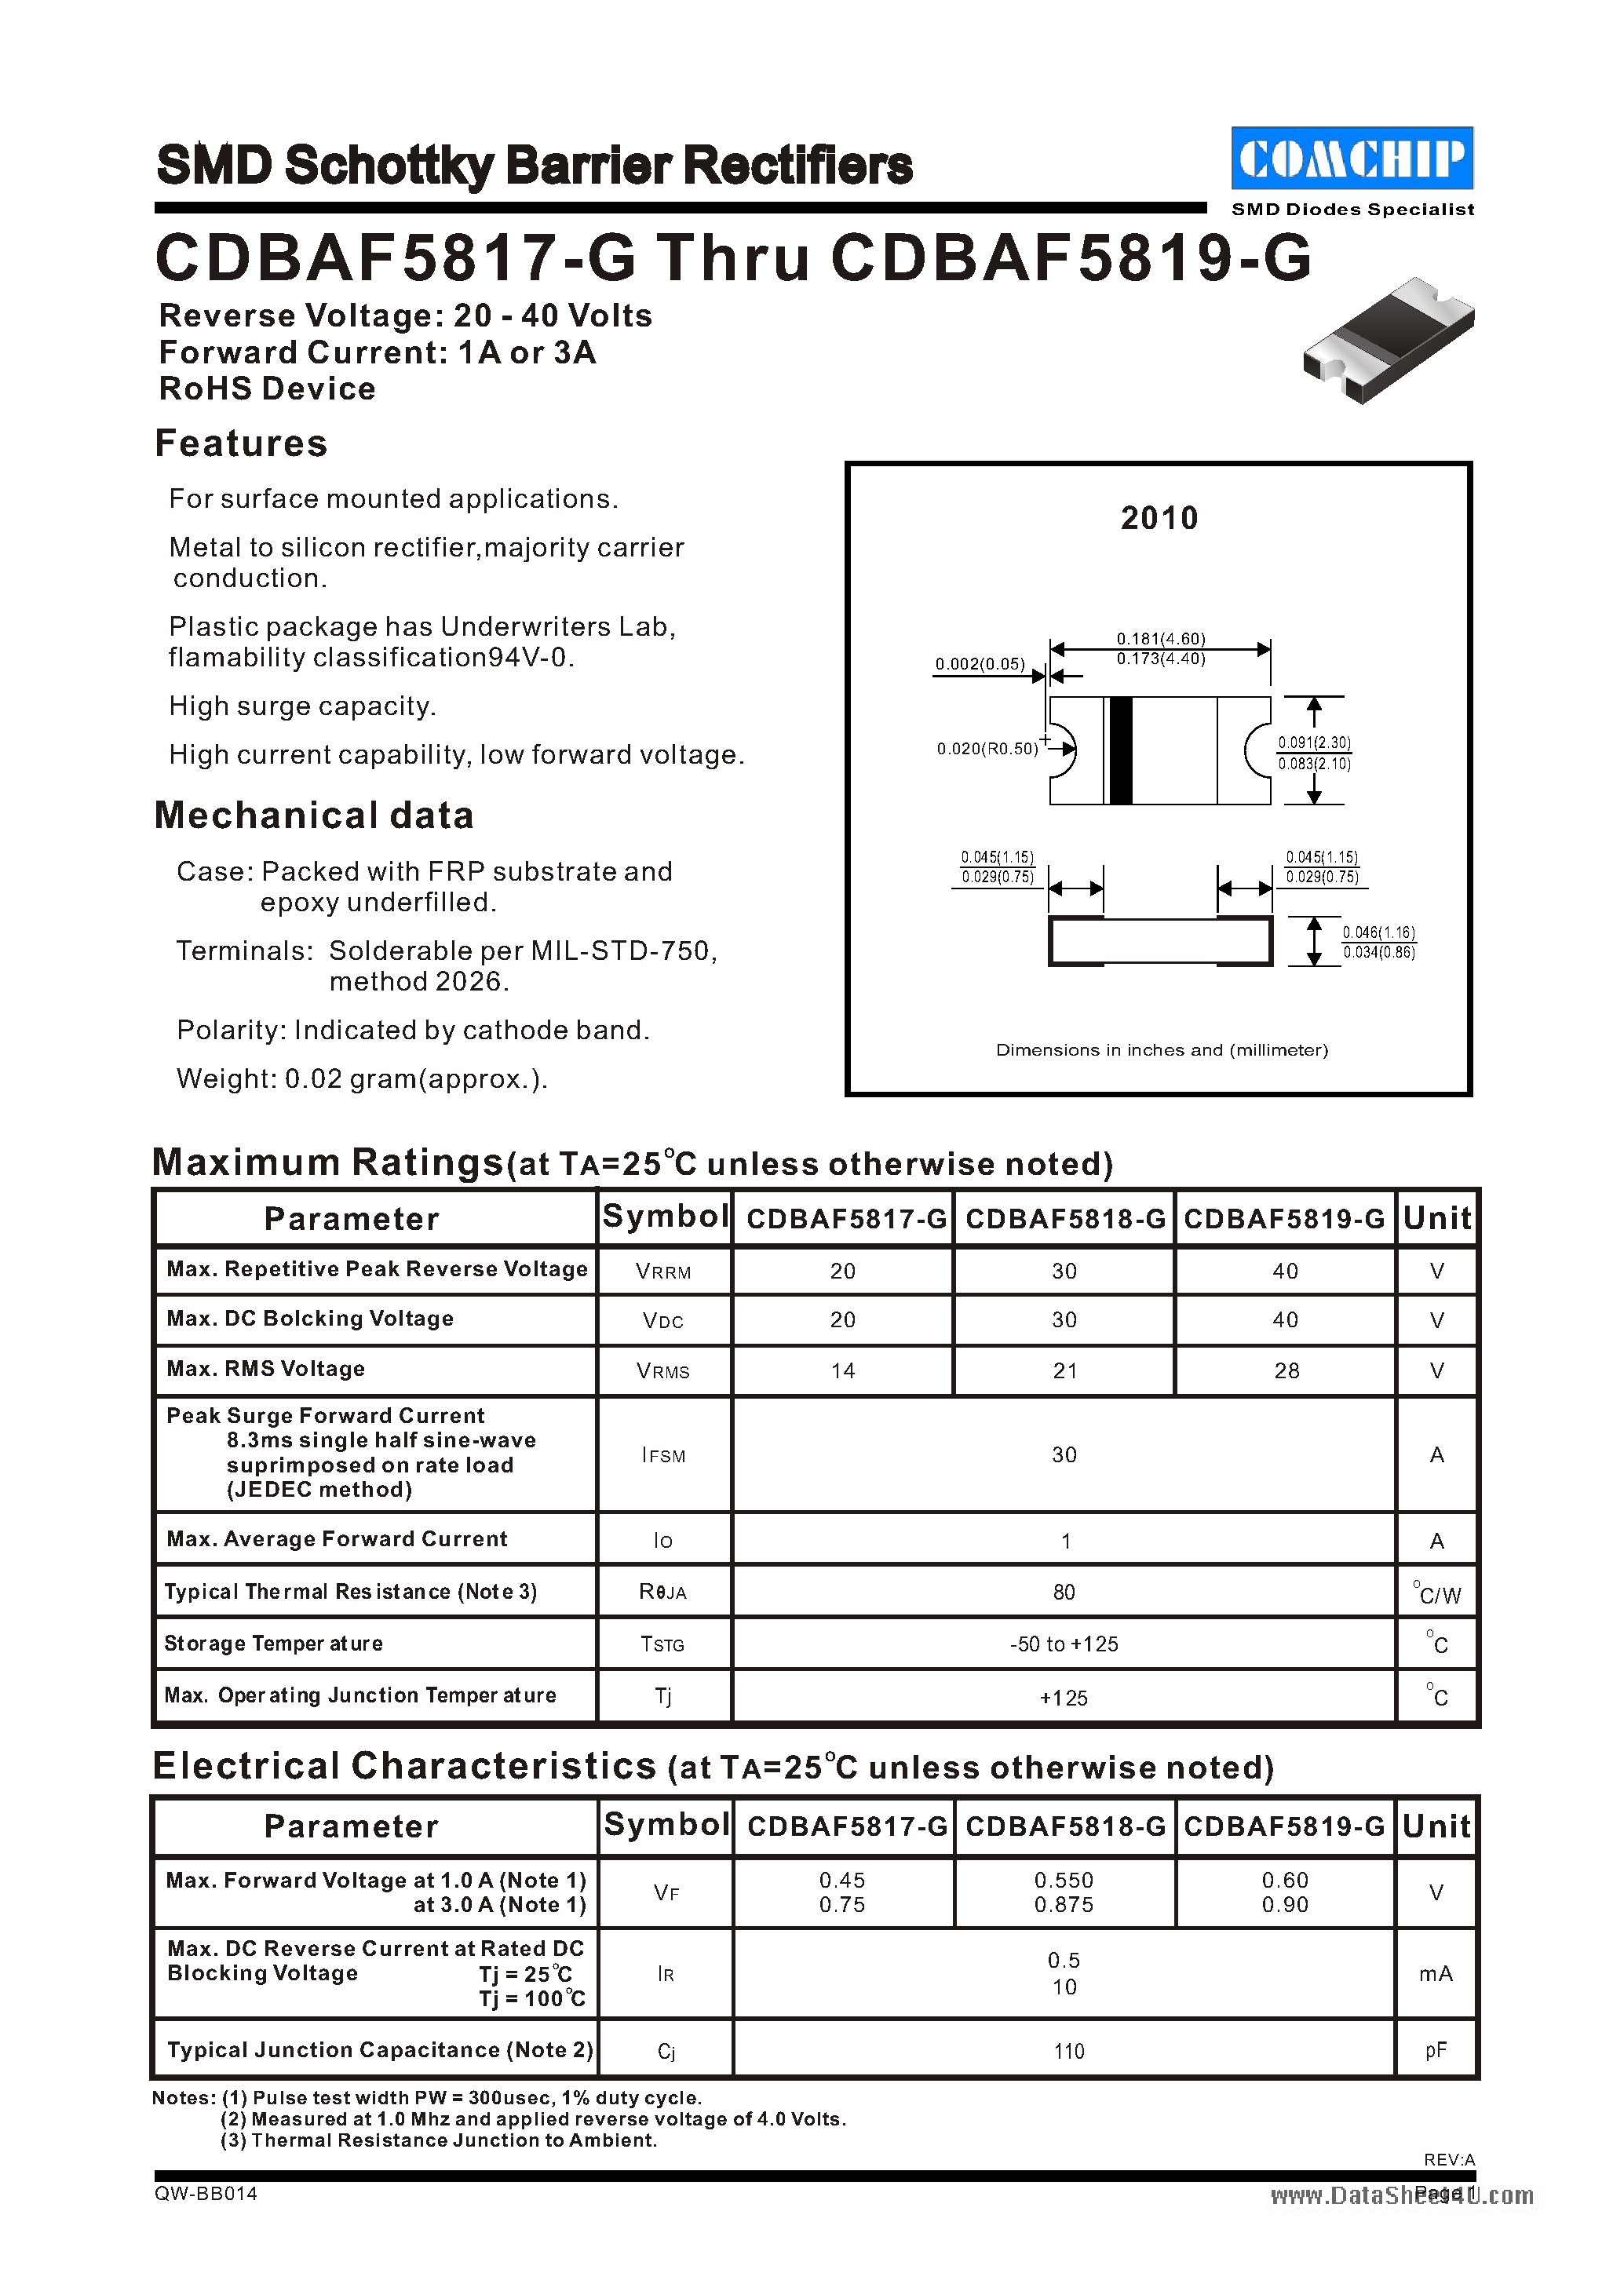 Datasheet CDBAF5817-G - (CDBAF5817-G - CDBAF5819-G) SMD Schottky Barrier Rectifiers page 1